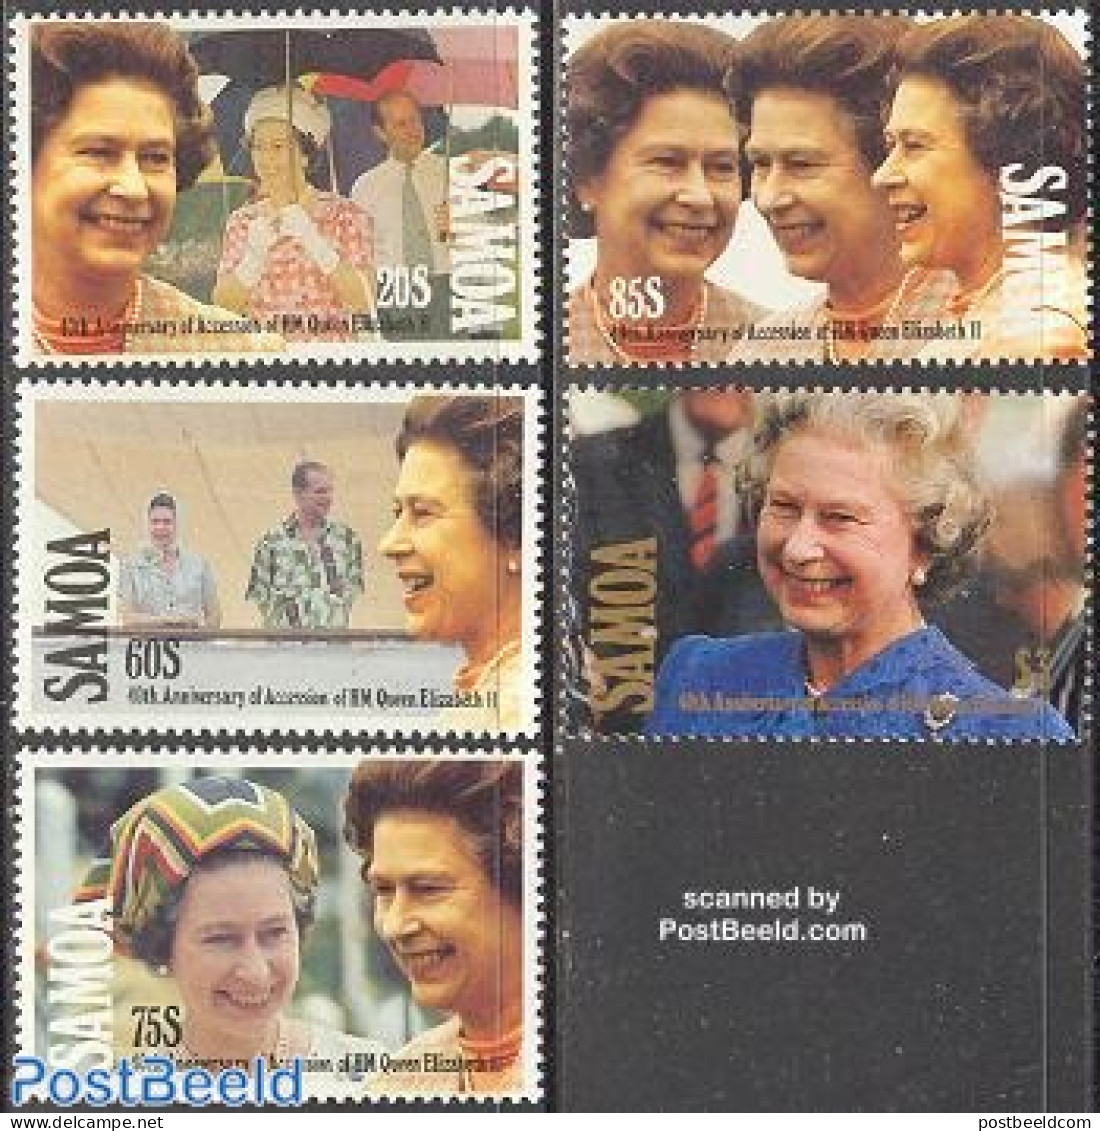 Samoa 1992 Accession 40th Anniversary 5v, Mint NH, History - Kings & Queens (Royalty) - Royalties, Royals